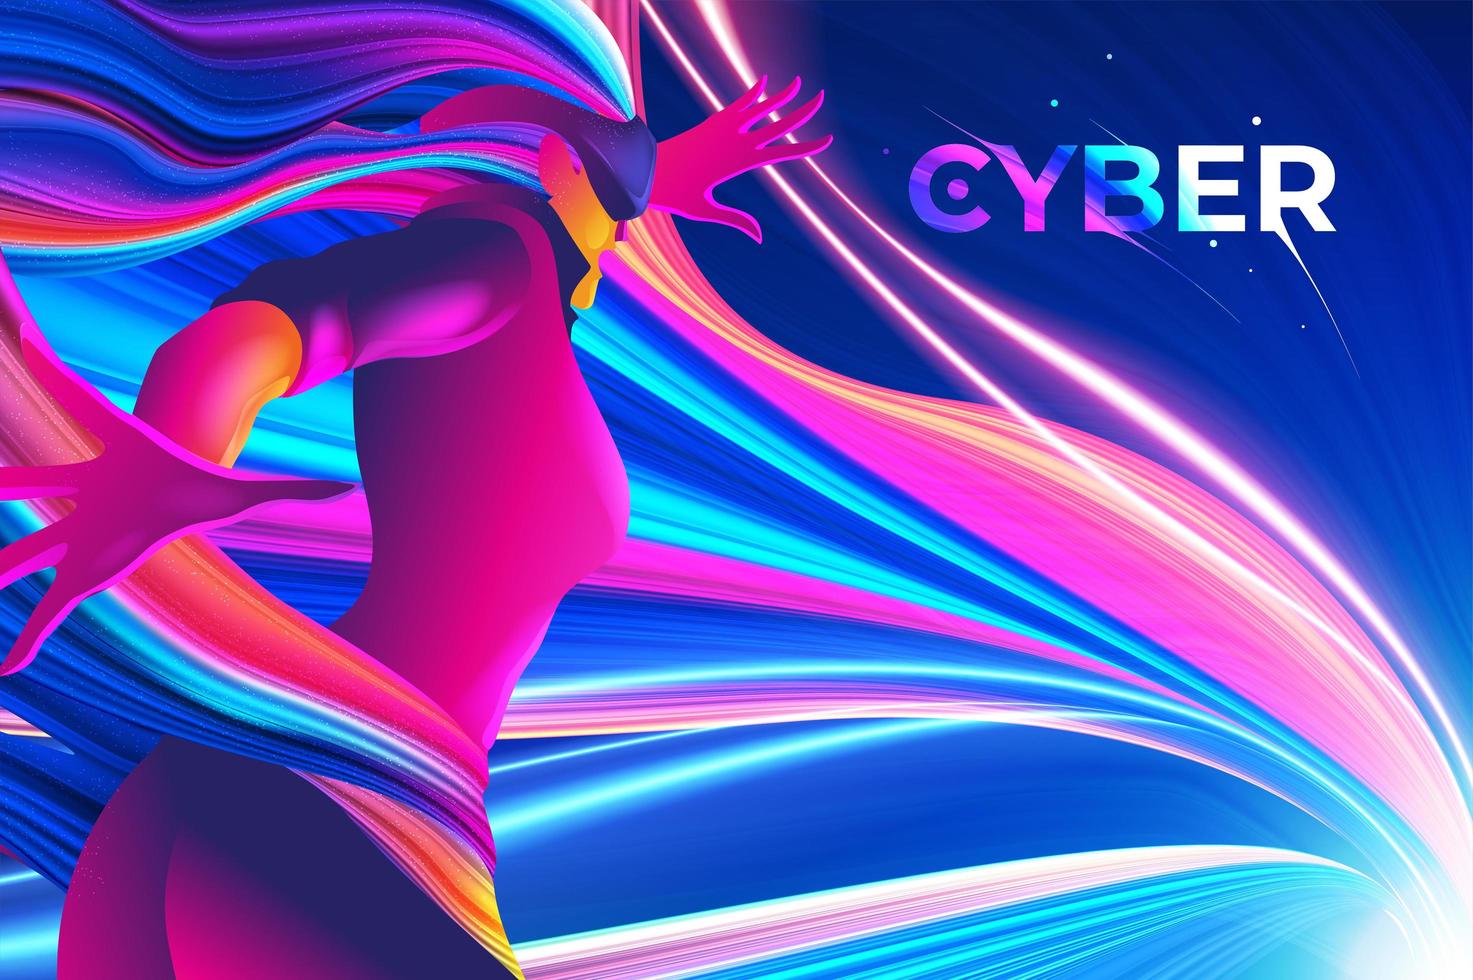 Cyber theme design vector